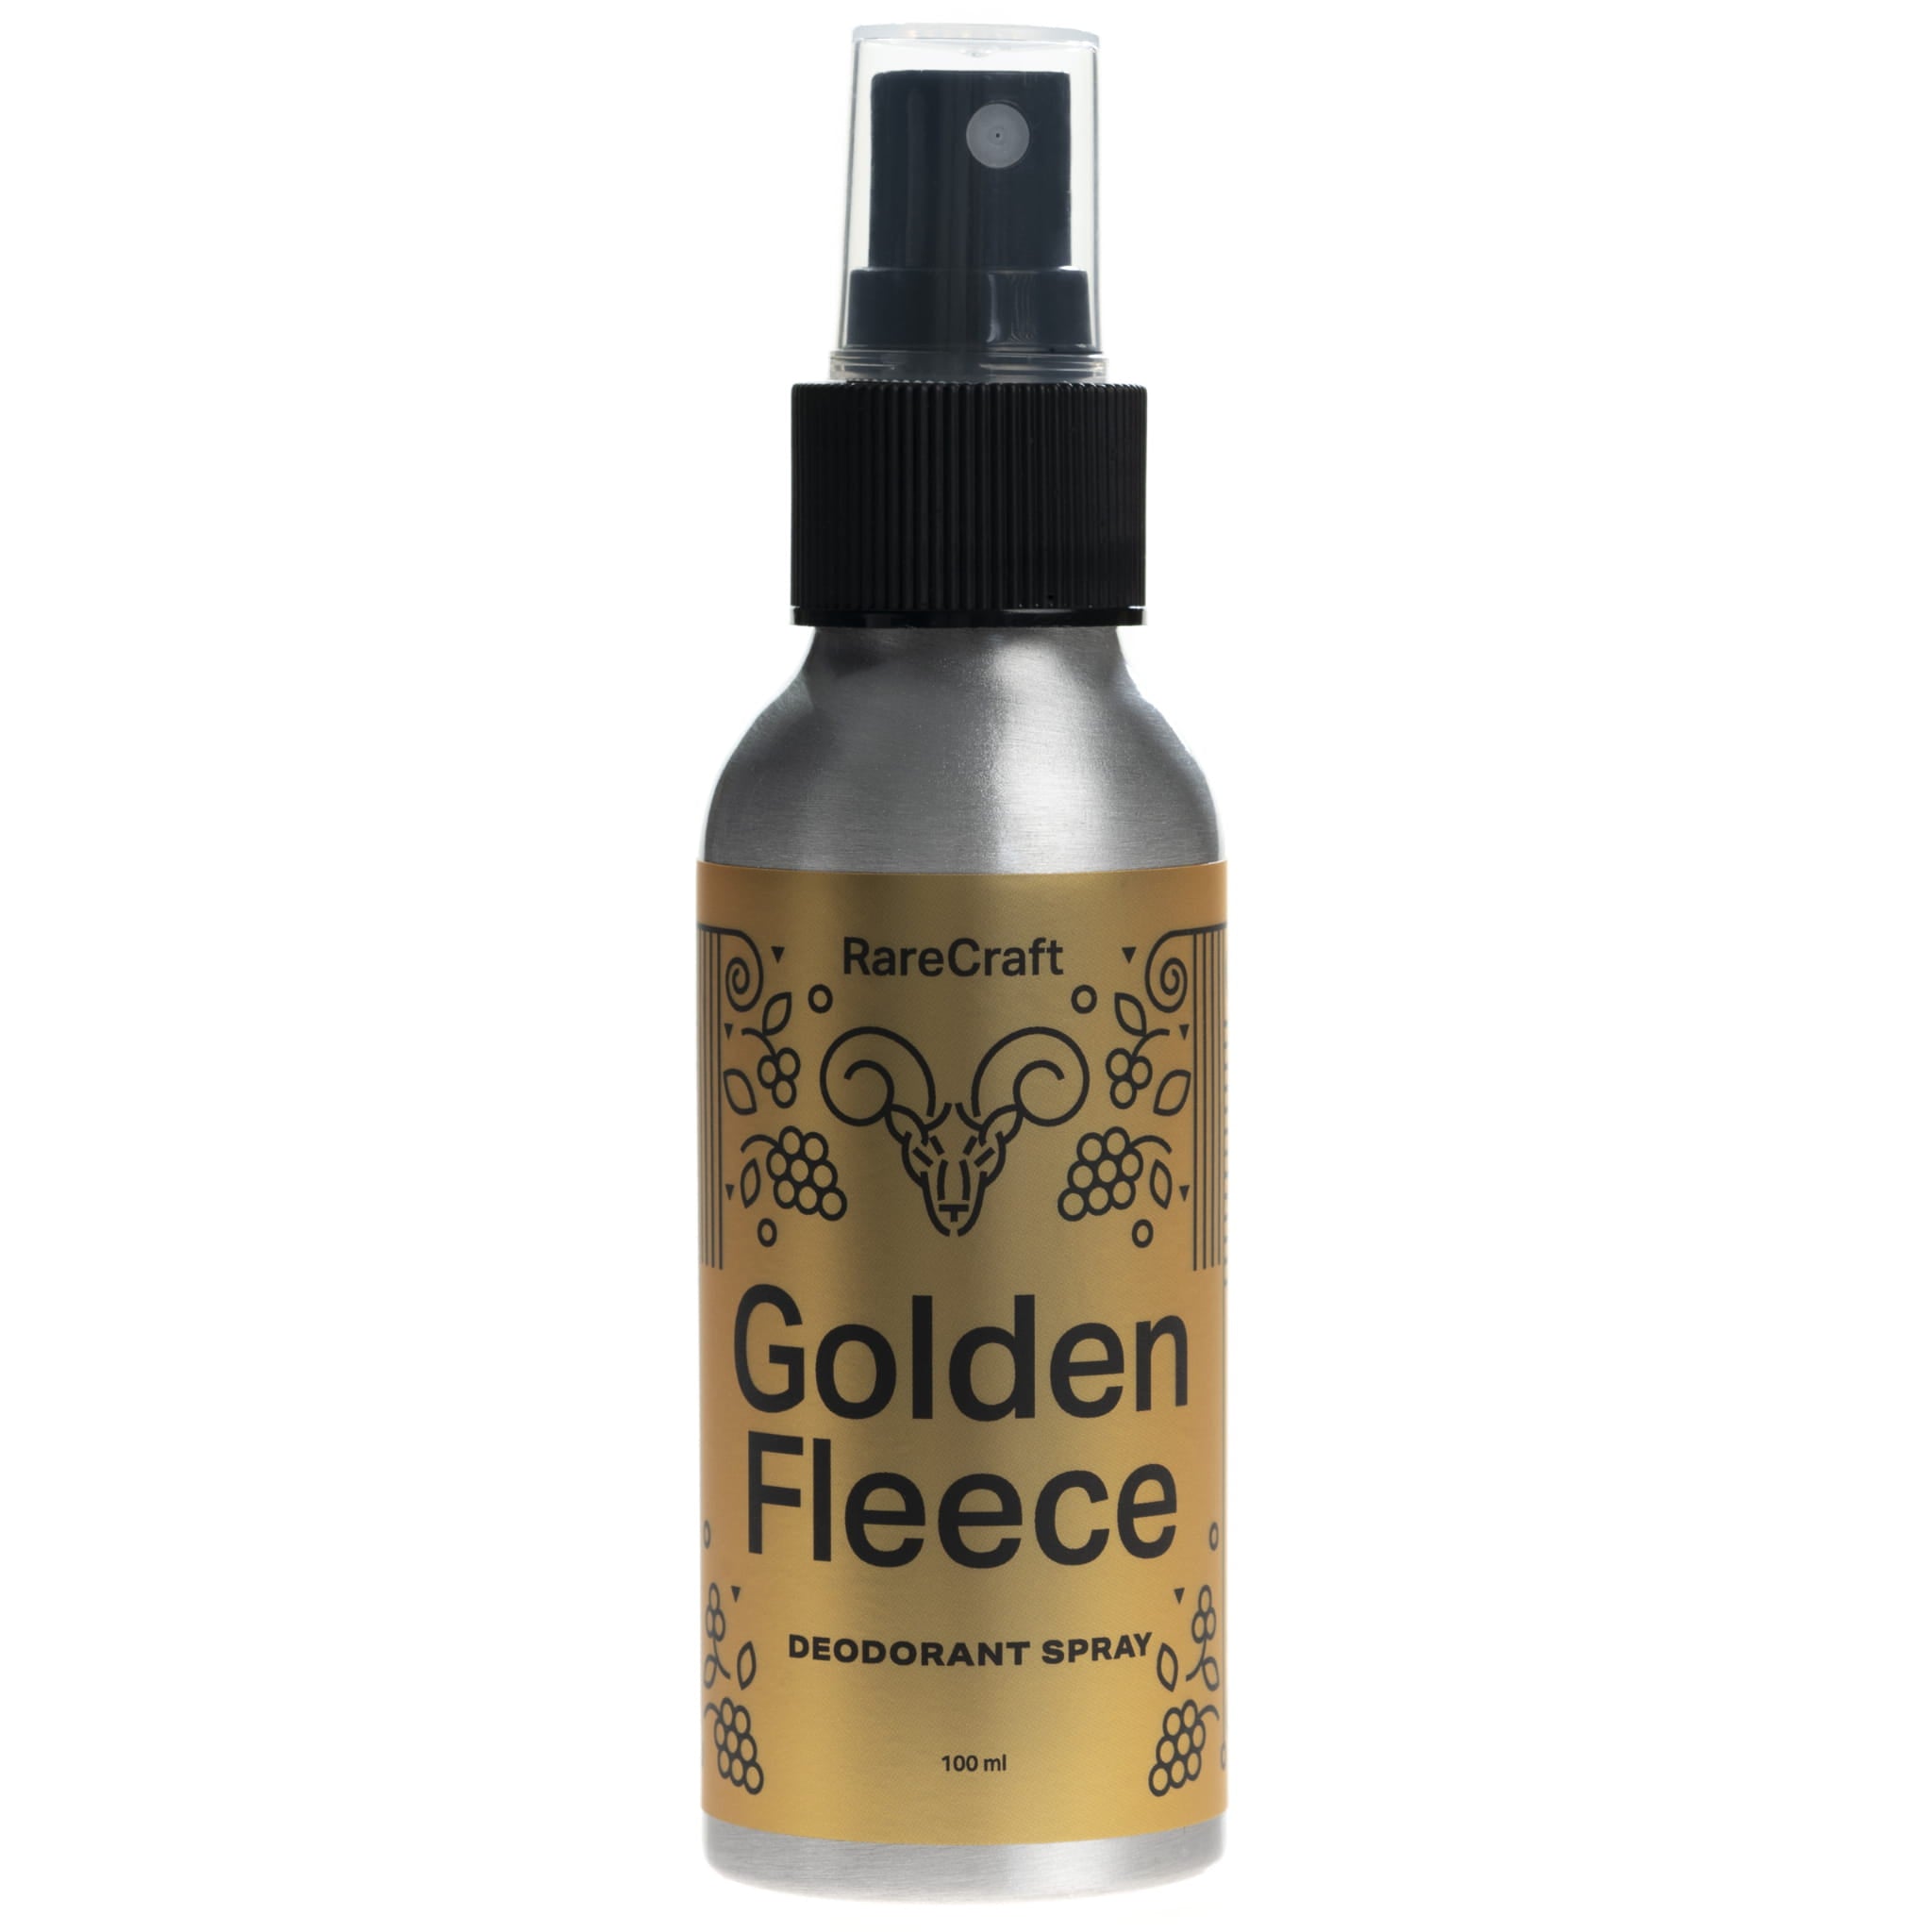 RareCraft Golden Fleece, Deodorant Spray